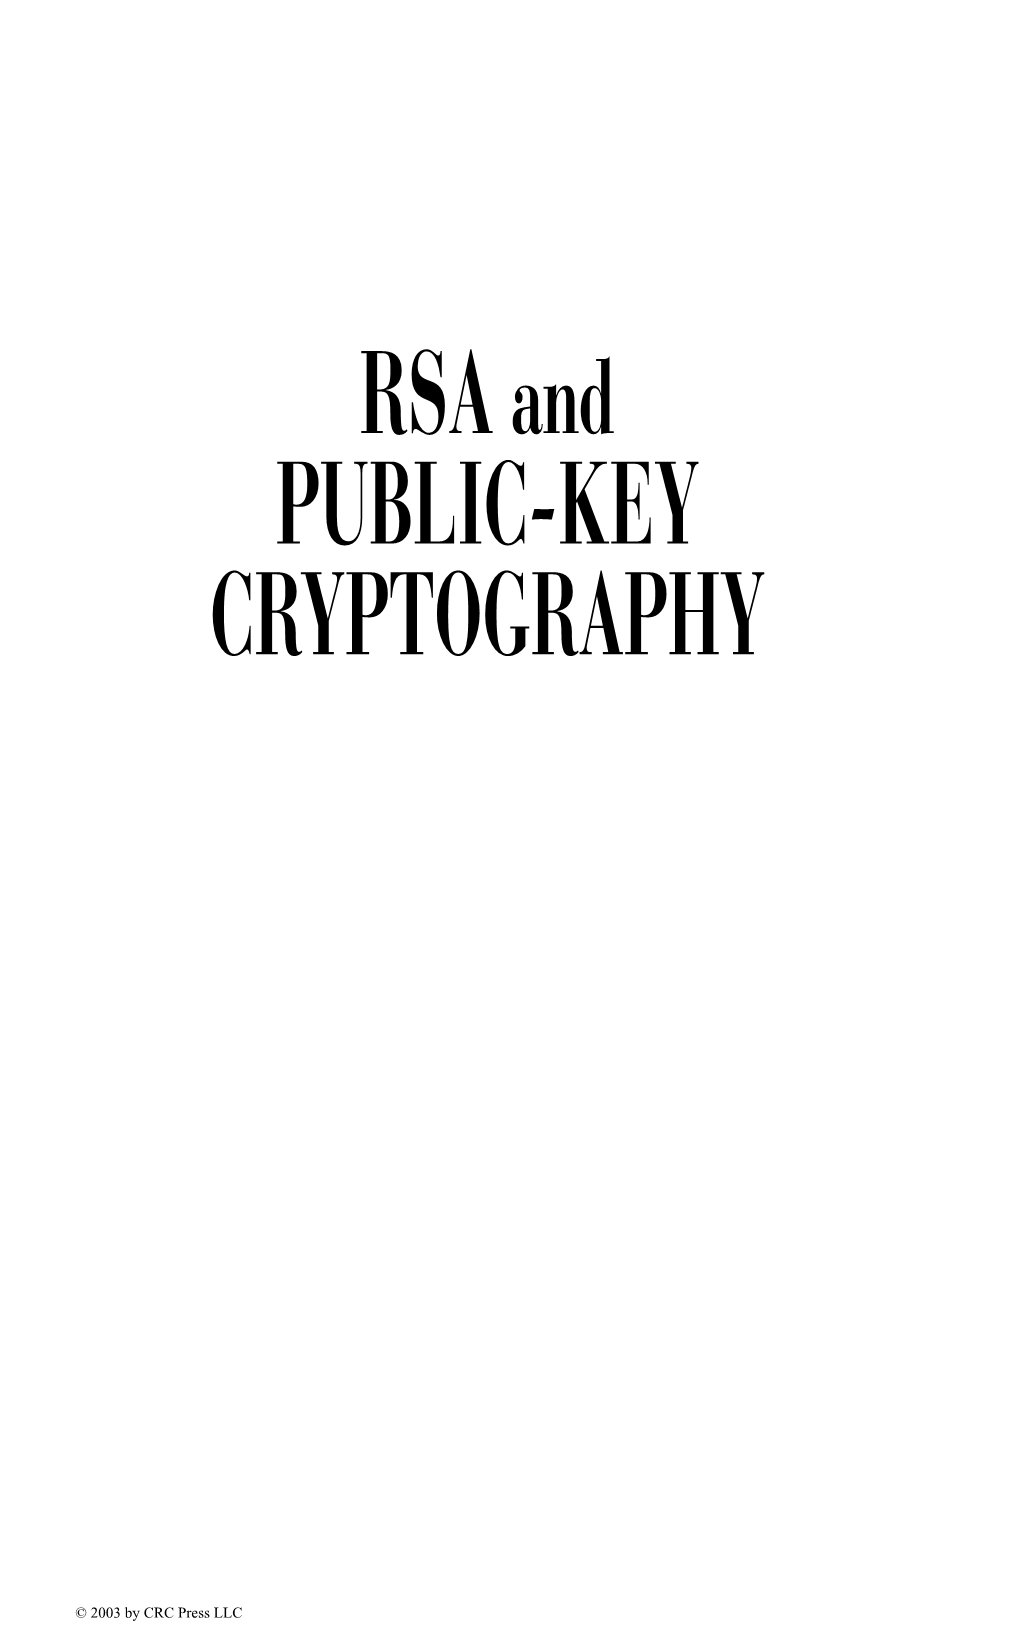 RSA and PUBLIC-KEY CRYPTOGRAPHY